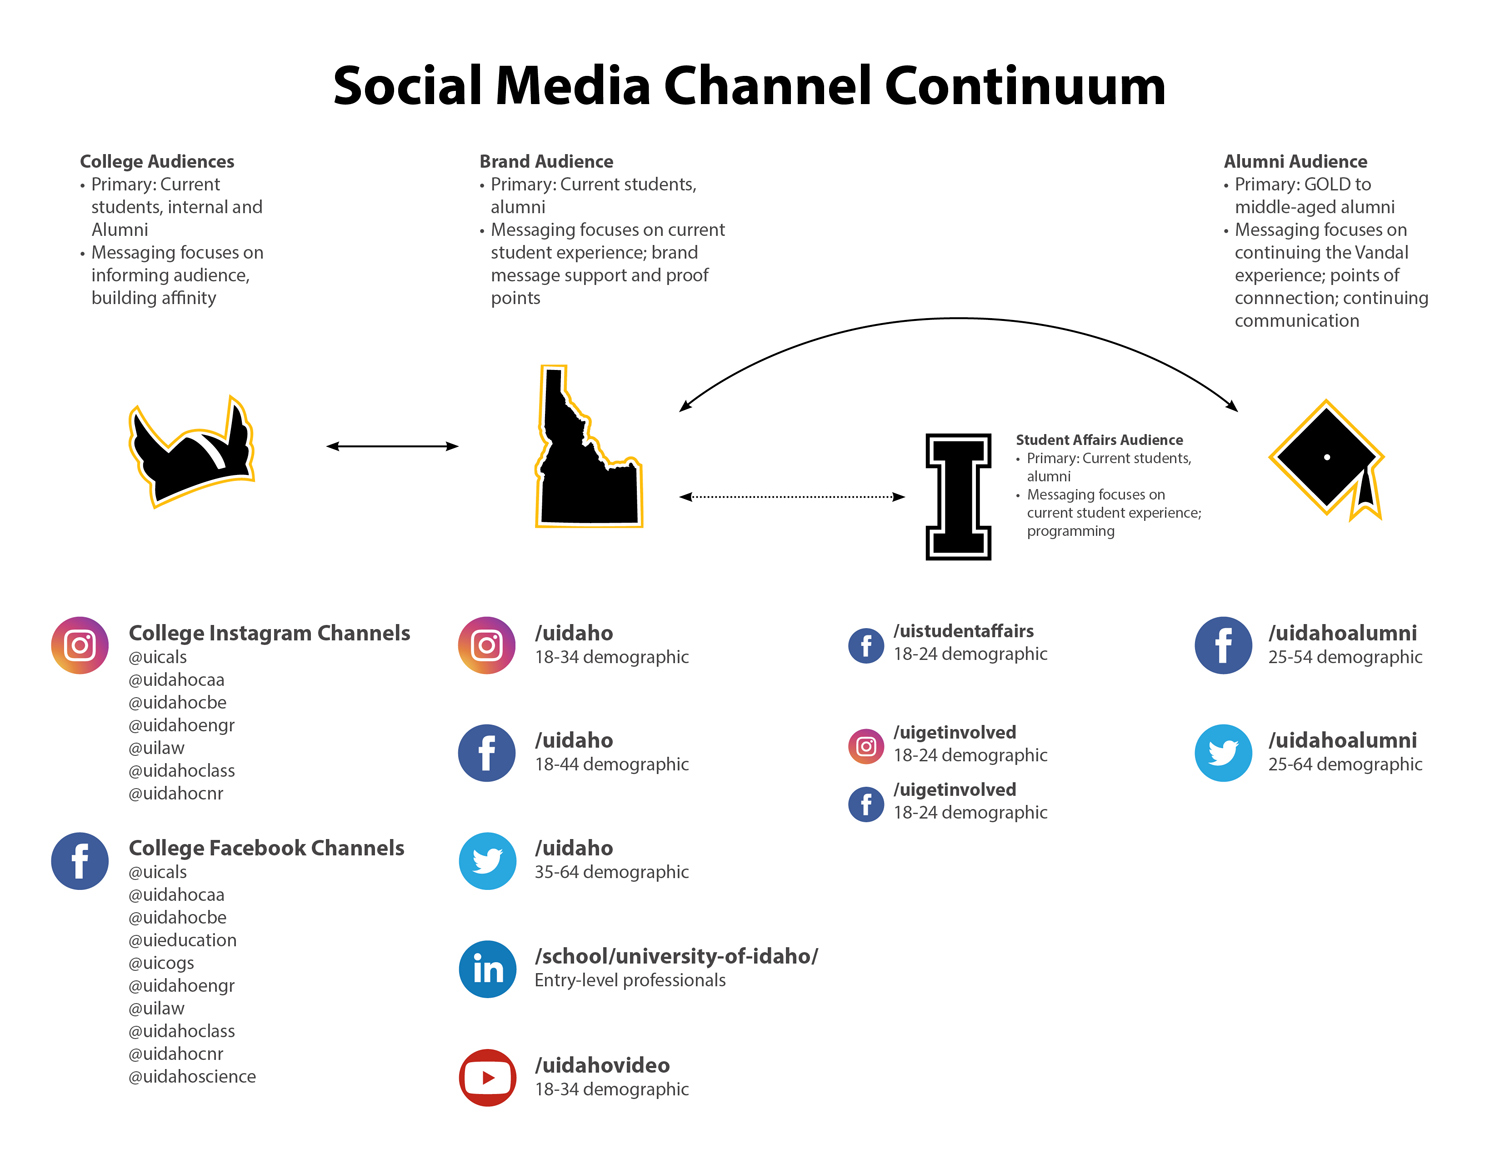 The Social Media Continuum